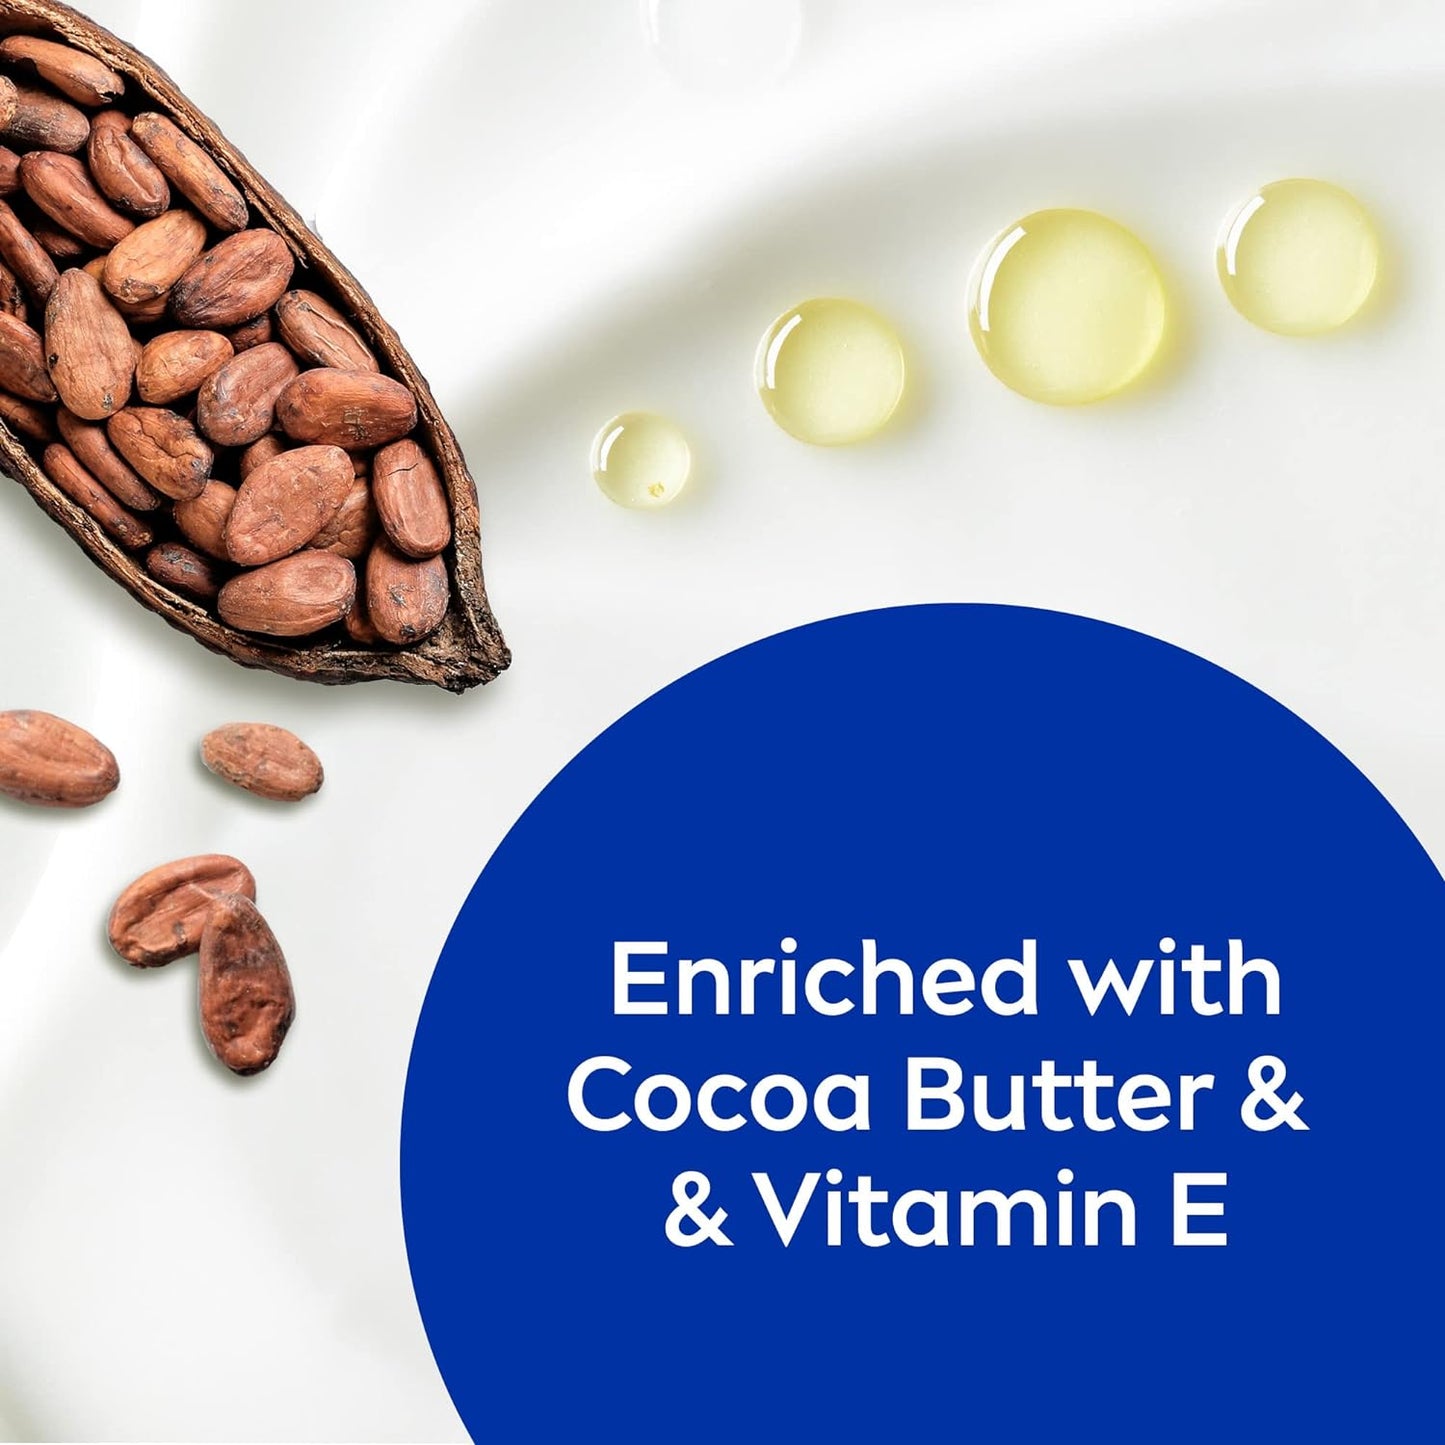 NIVEA Body Lotion Moisturizing Dry Skin, Cocoa Butter Vitamin E, 2x400ml